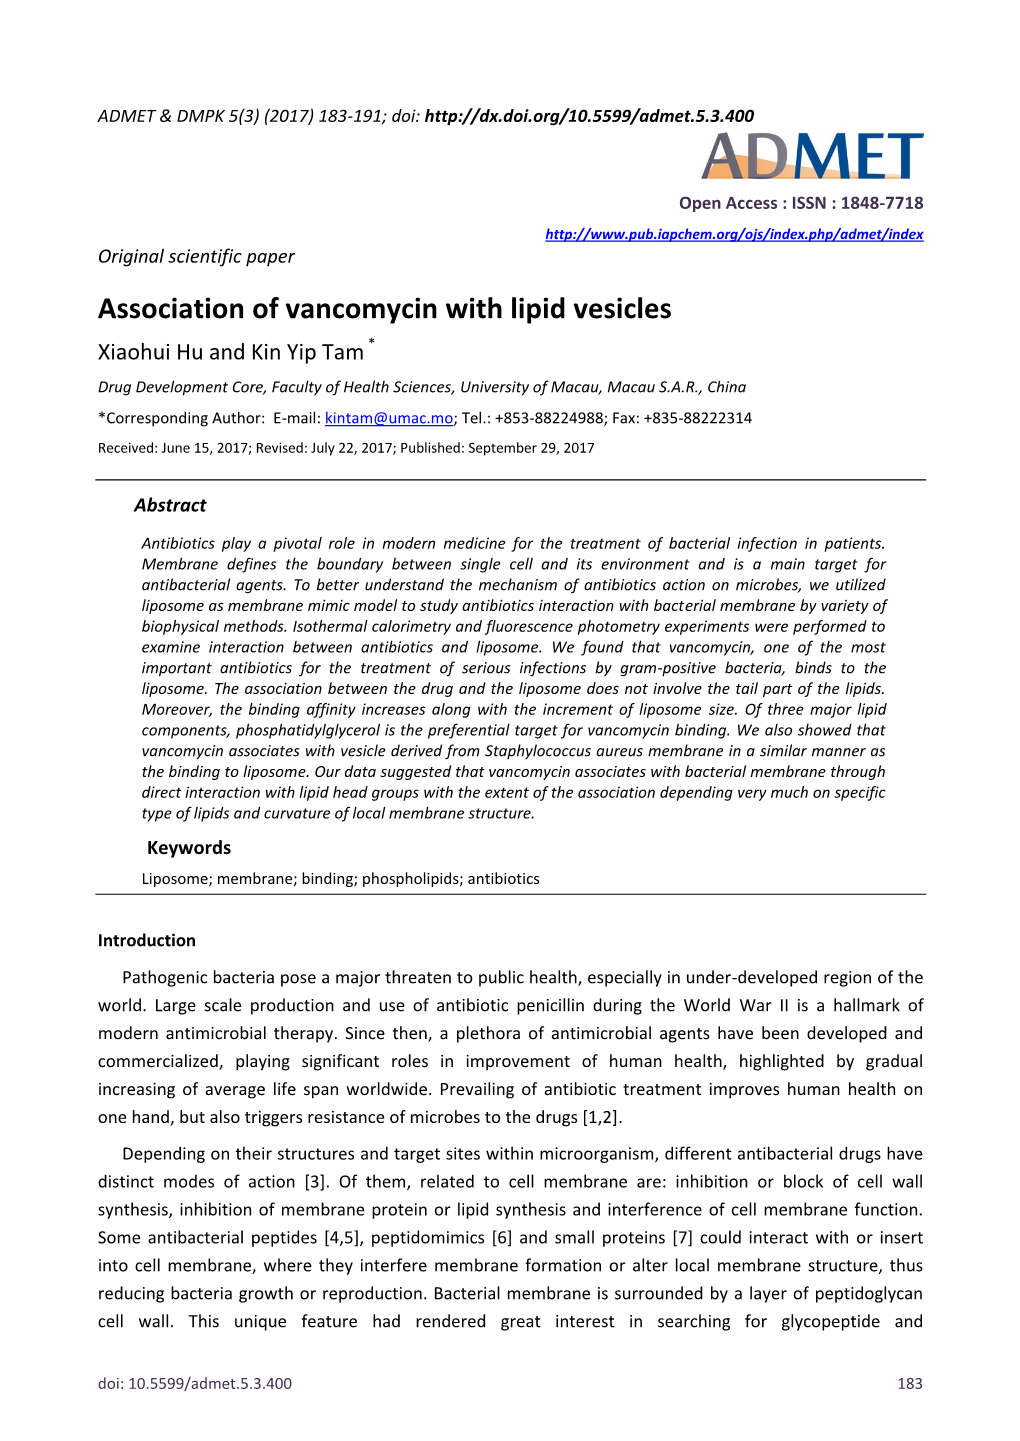 Association of Vancomycin with Lipid Vesicles